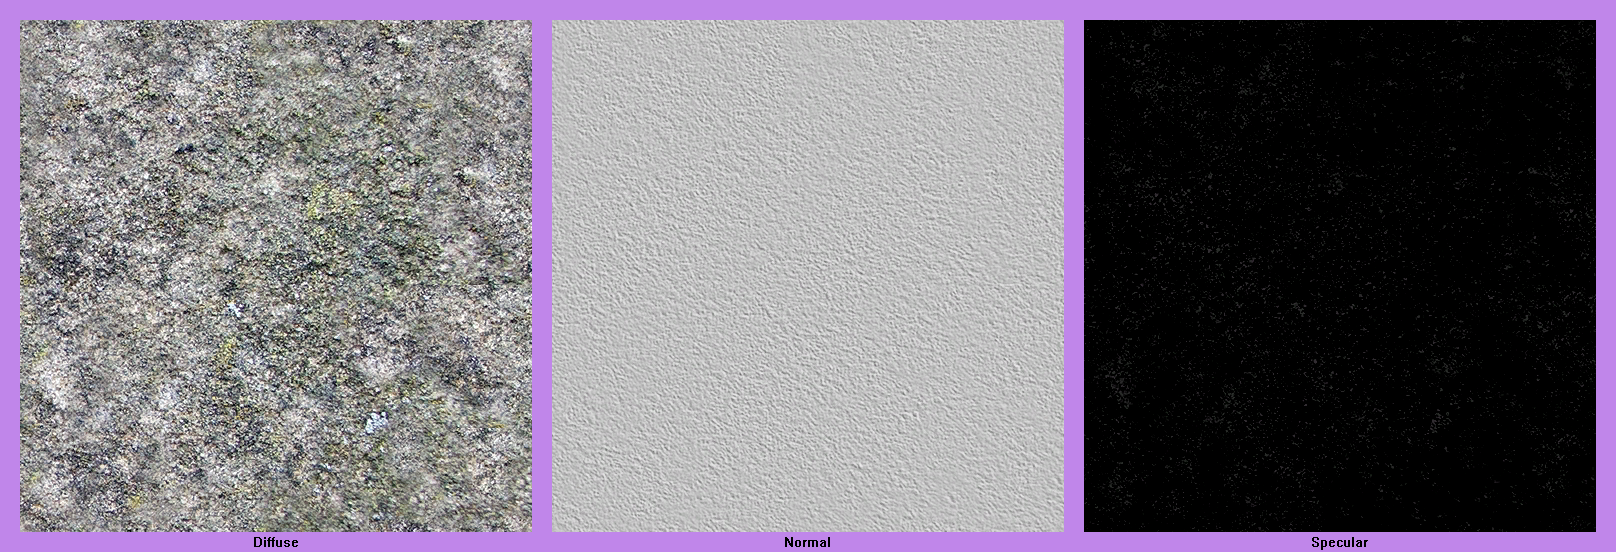 LittleBigPlanet - Bumpy Concrete